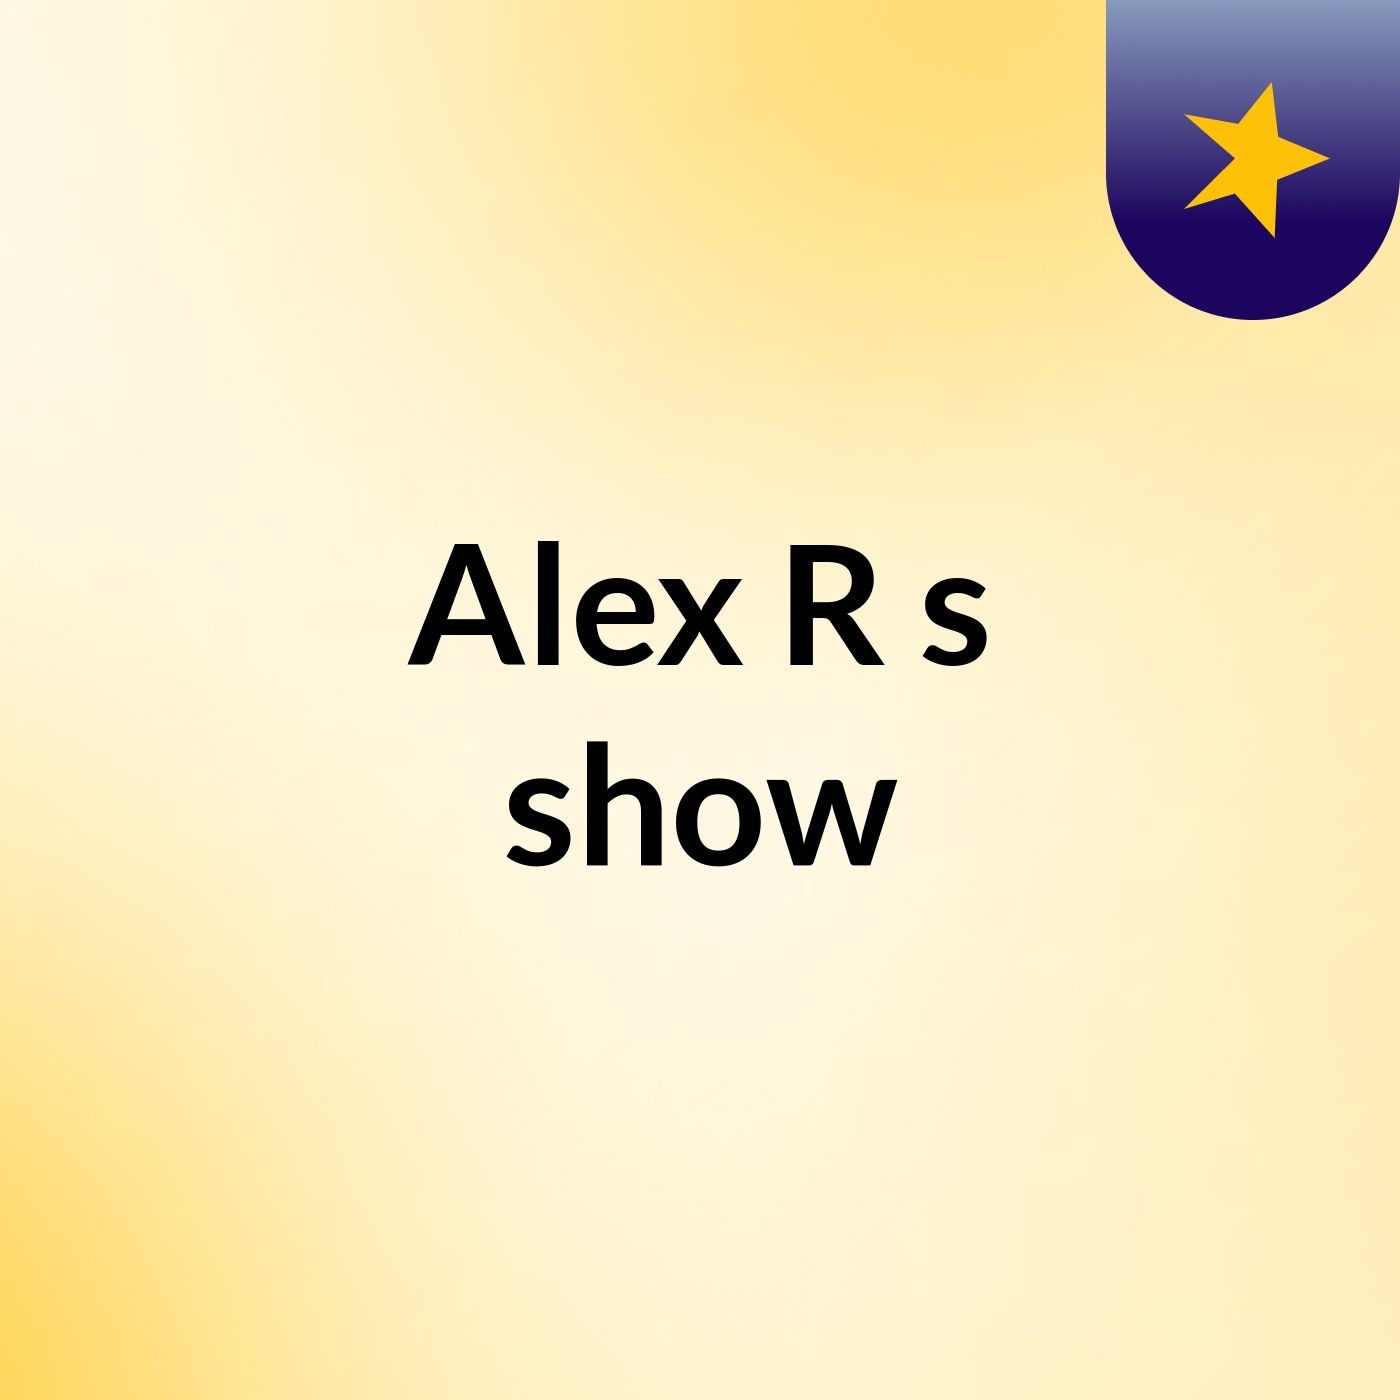 Alex R's show